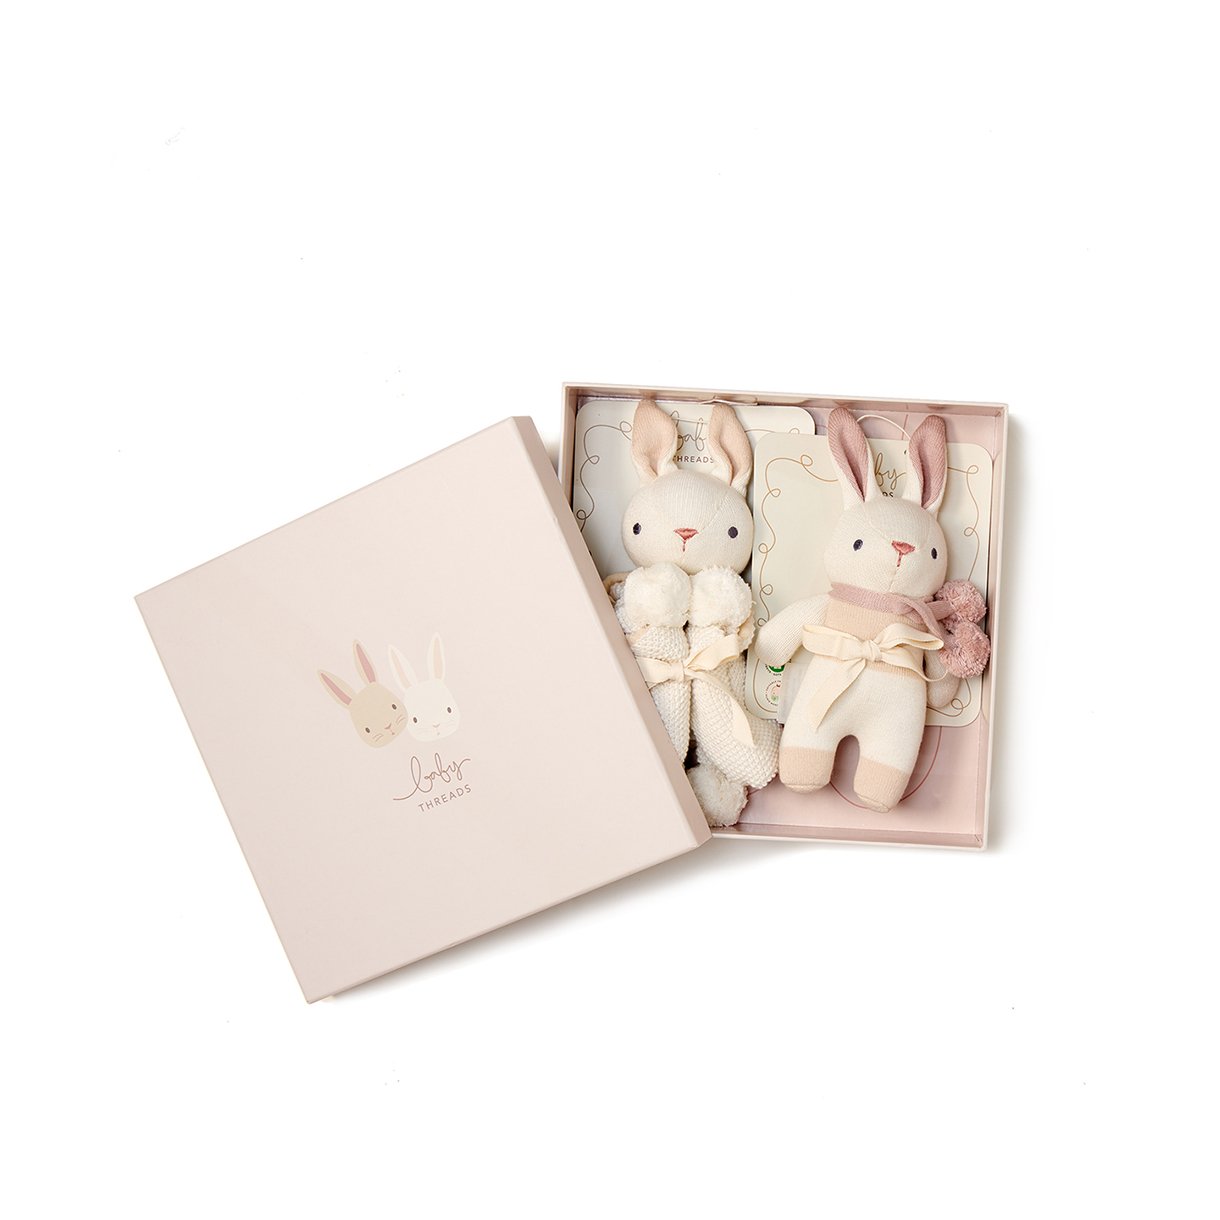 ThreadBear - Gift Box Set - Cream Bunny - Comforter and Rattle - (TB4080) - Leker